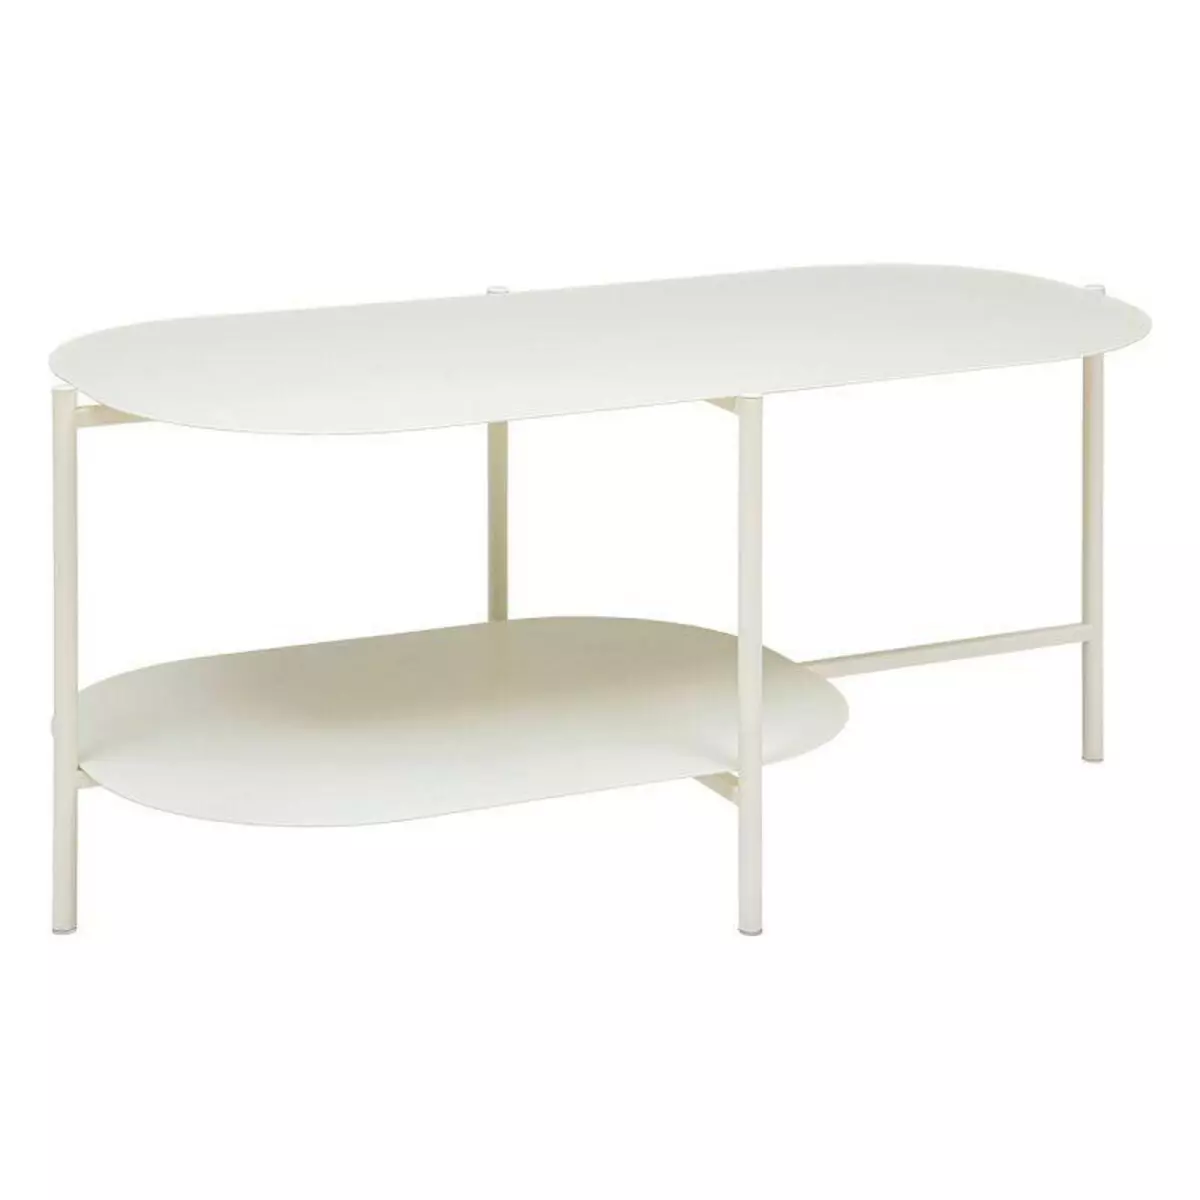  Table Basse 2 Niveaux  Haja  100cm Blanc